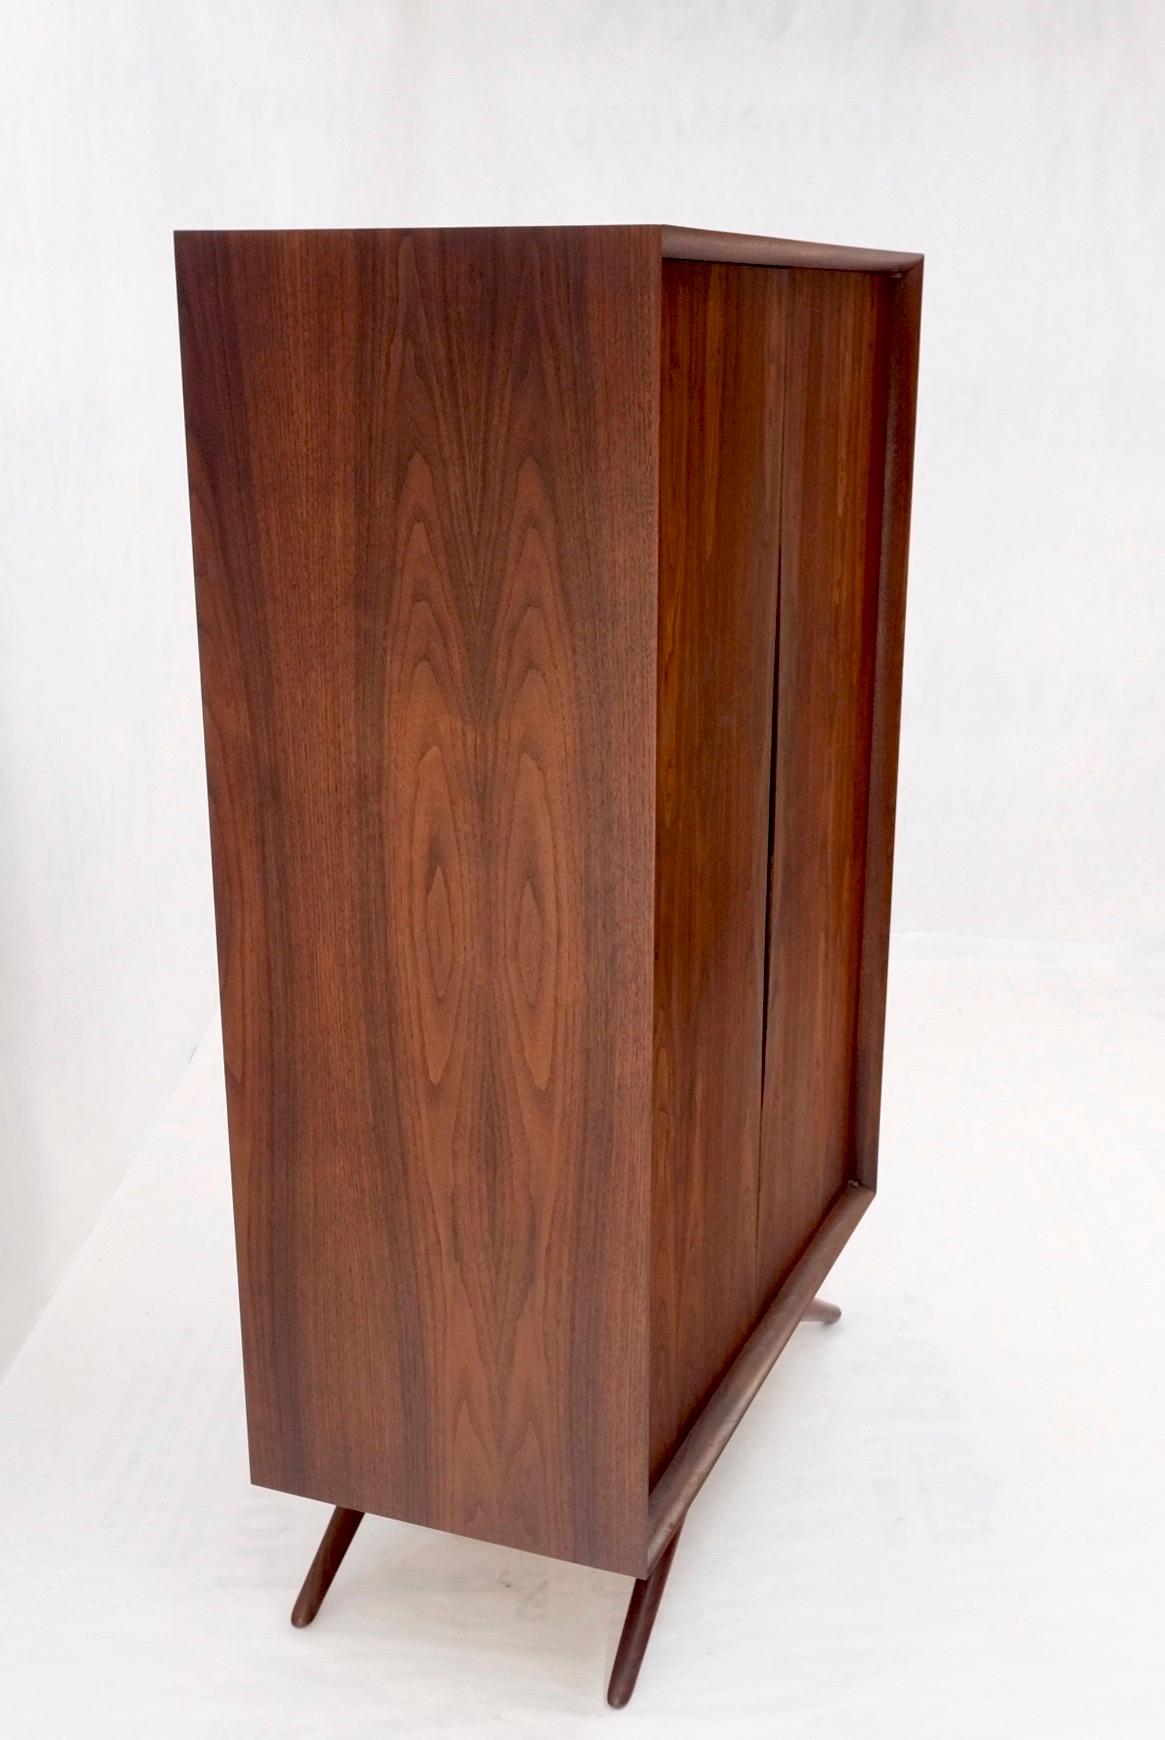  Vladimir Kagan Walnut Dresser Two Door Cabinet Chifforobe on Slayed Legs Mint! For Sale 8